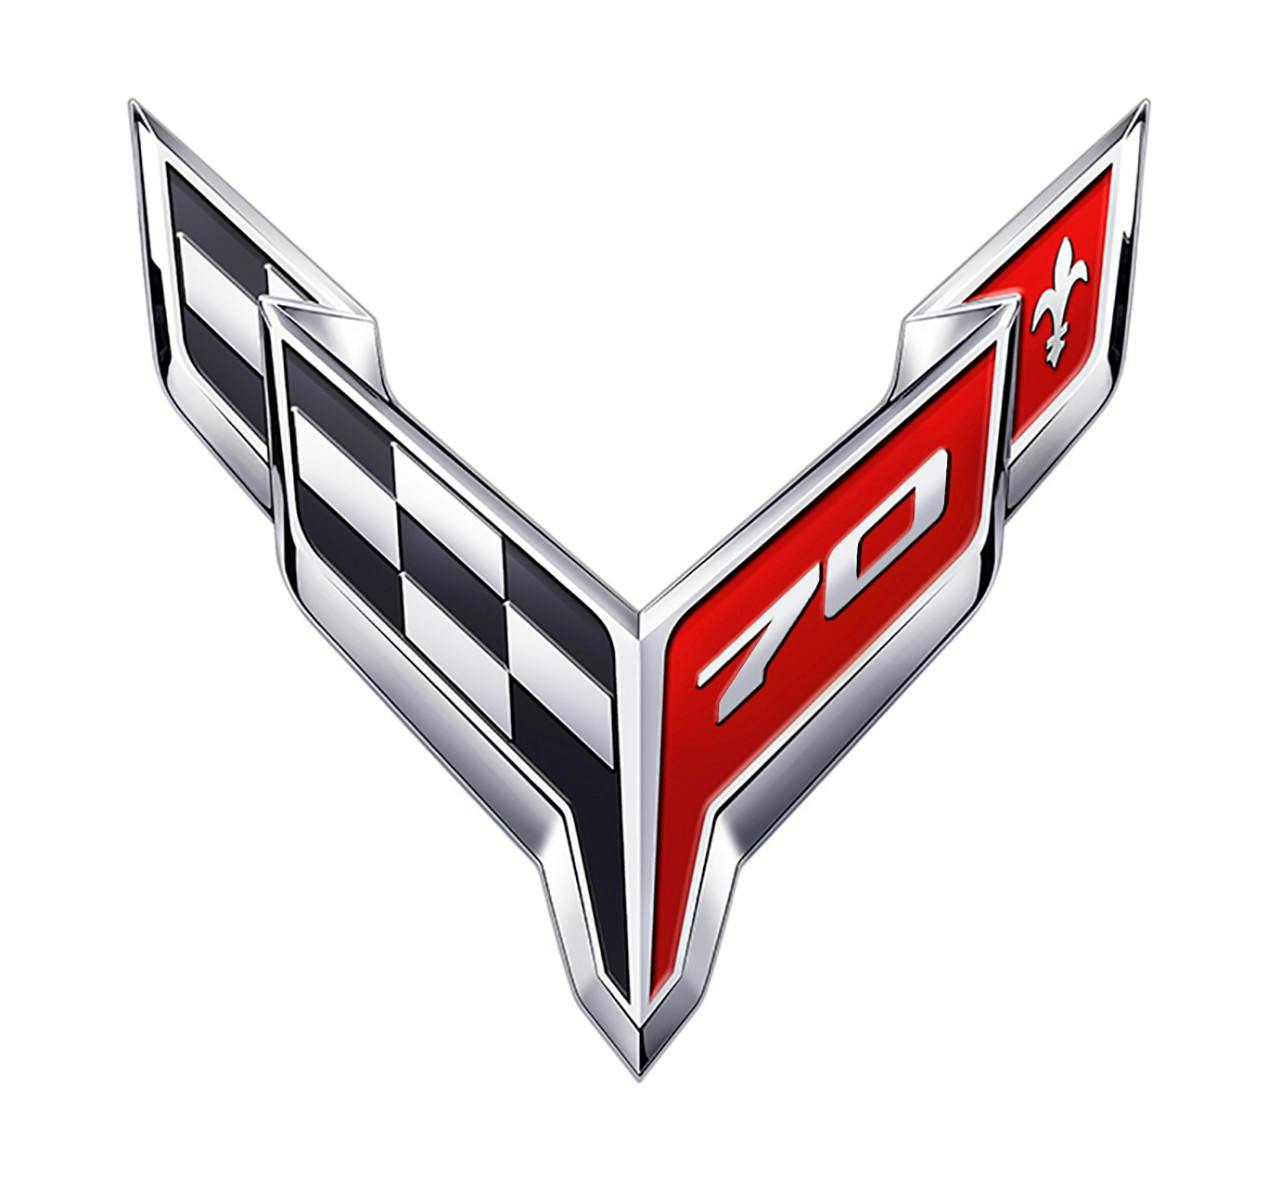 2023 Corvette 70th Anniversary Edition exterior badging includes